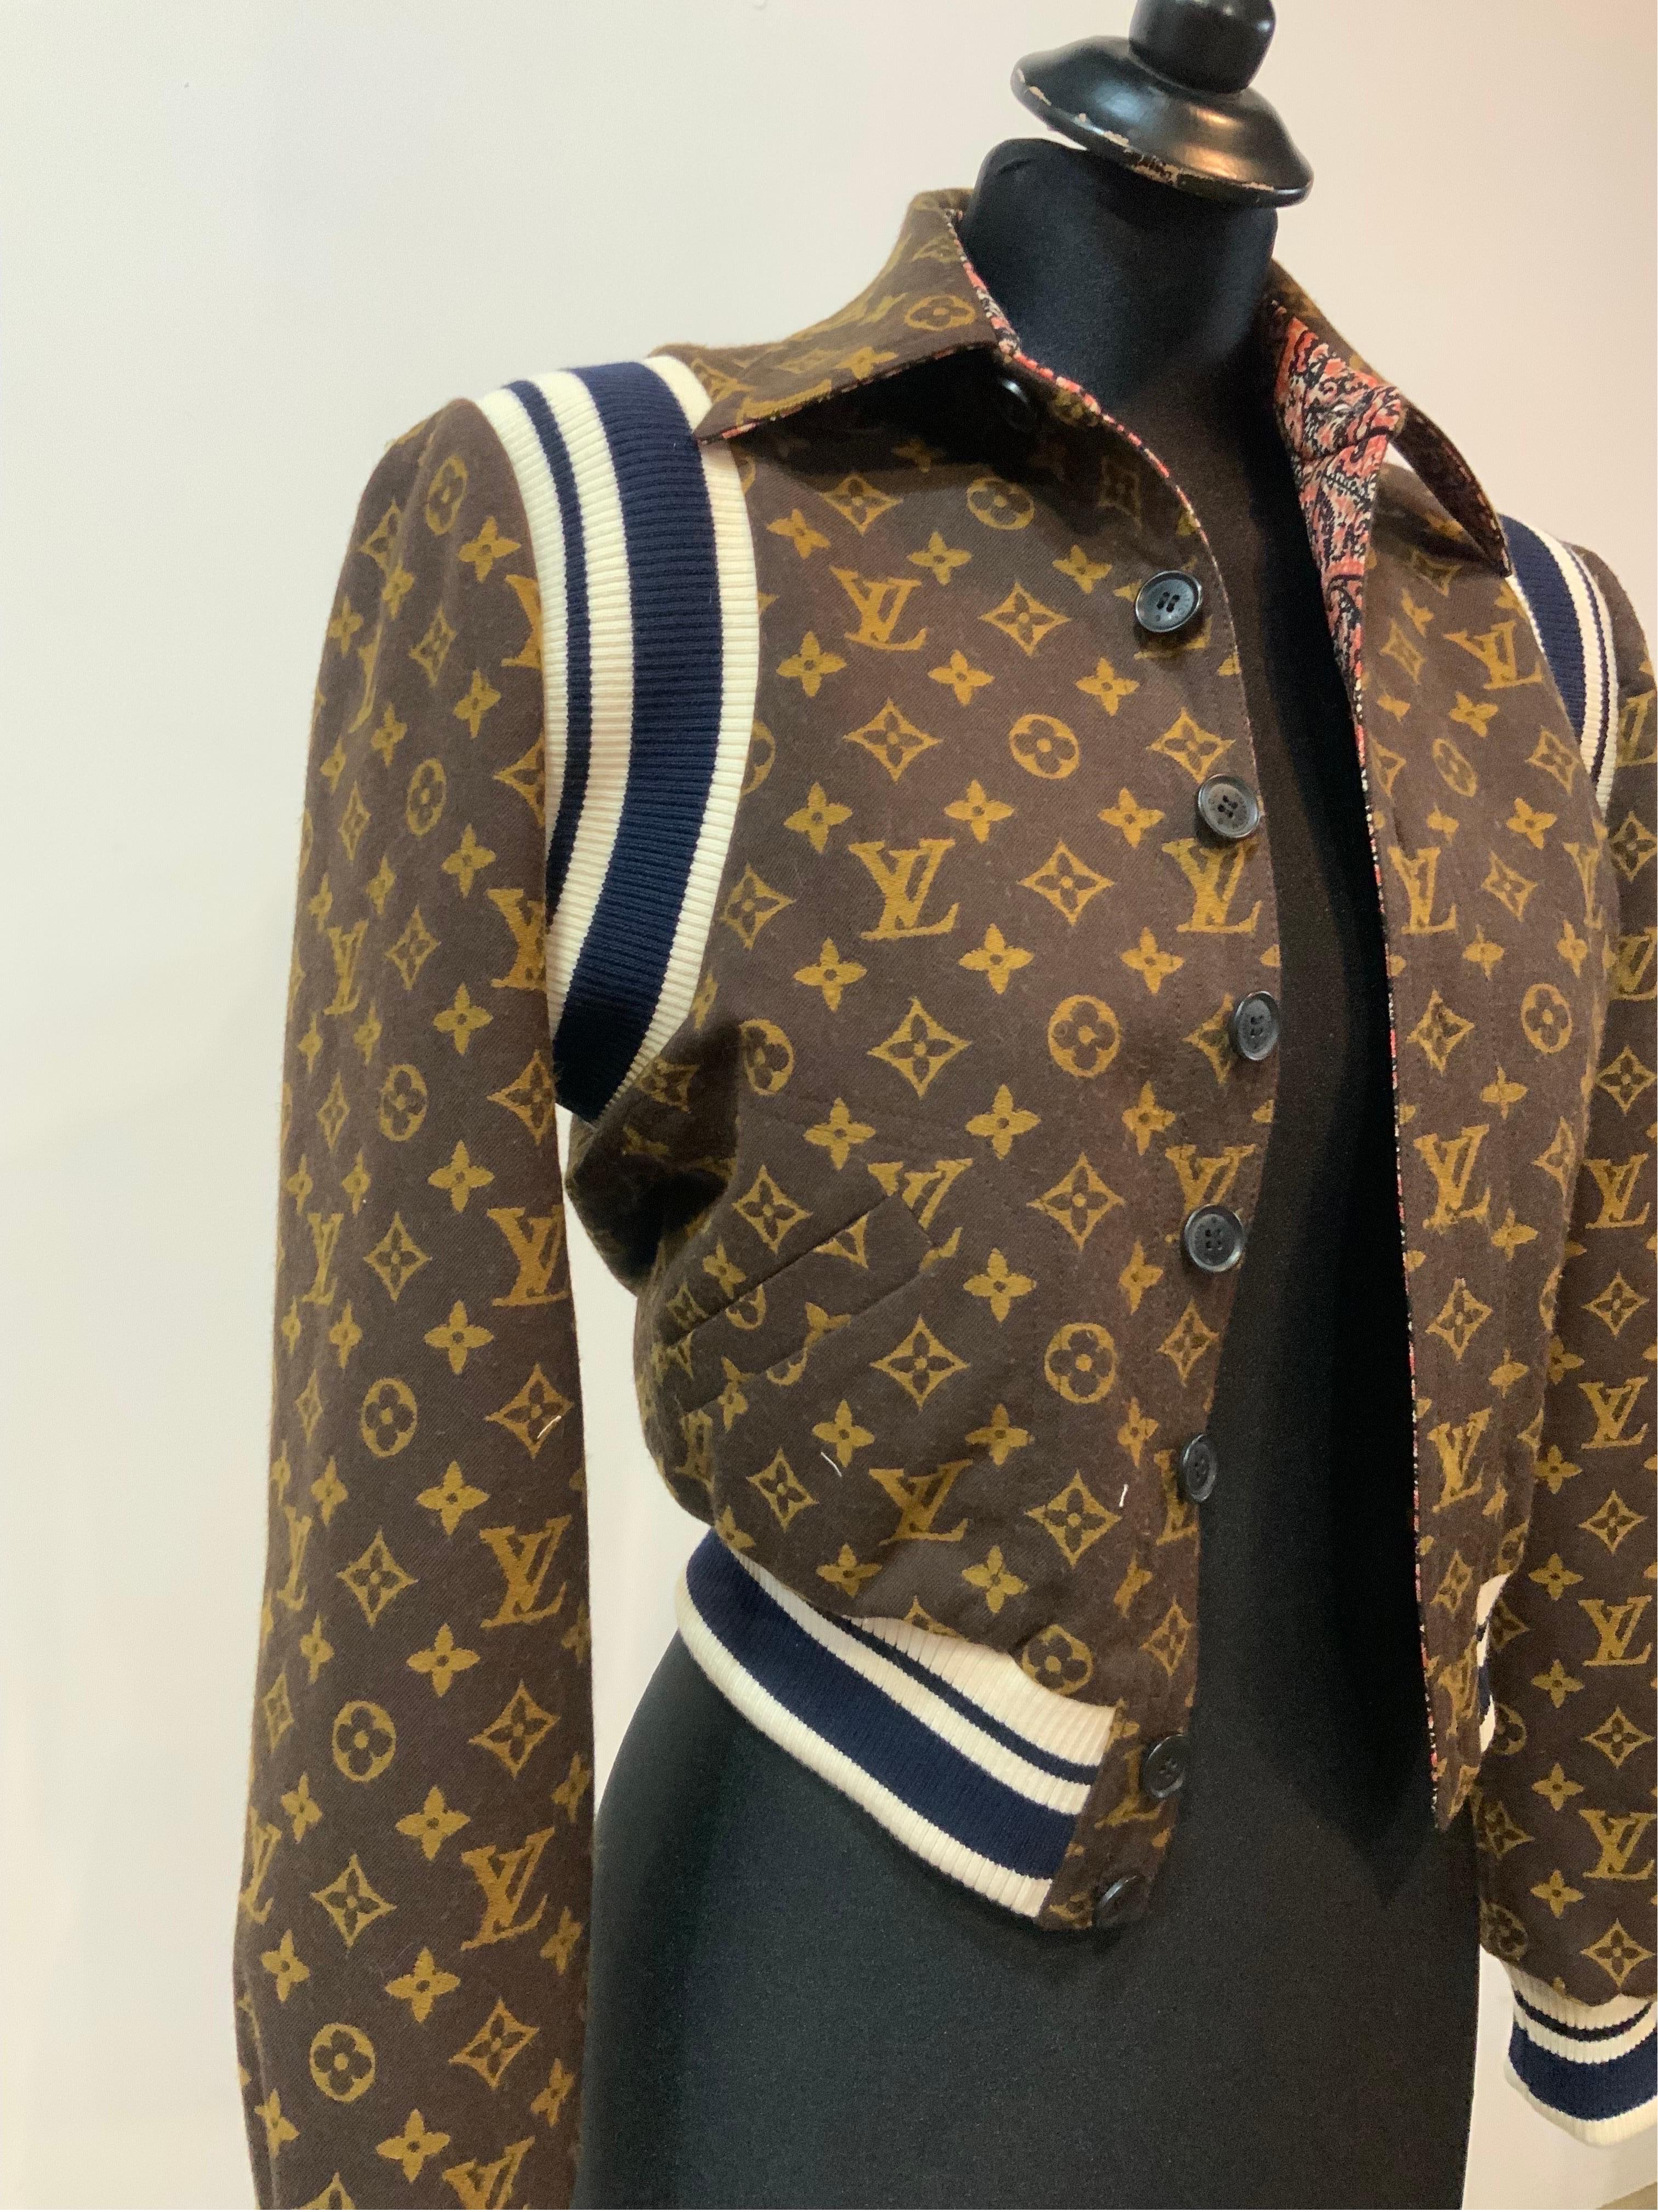 Louis Vuitton monogram/paisley pattern short bomber jacket (reversible).
Button closure.
Size and composition label missing.
We think it's a wool blend.
It fits an Italian size 38.
Shoulders 38 cm
Bust 38 cm
Length 55 cm
Sleeve 58
Excellent general